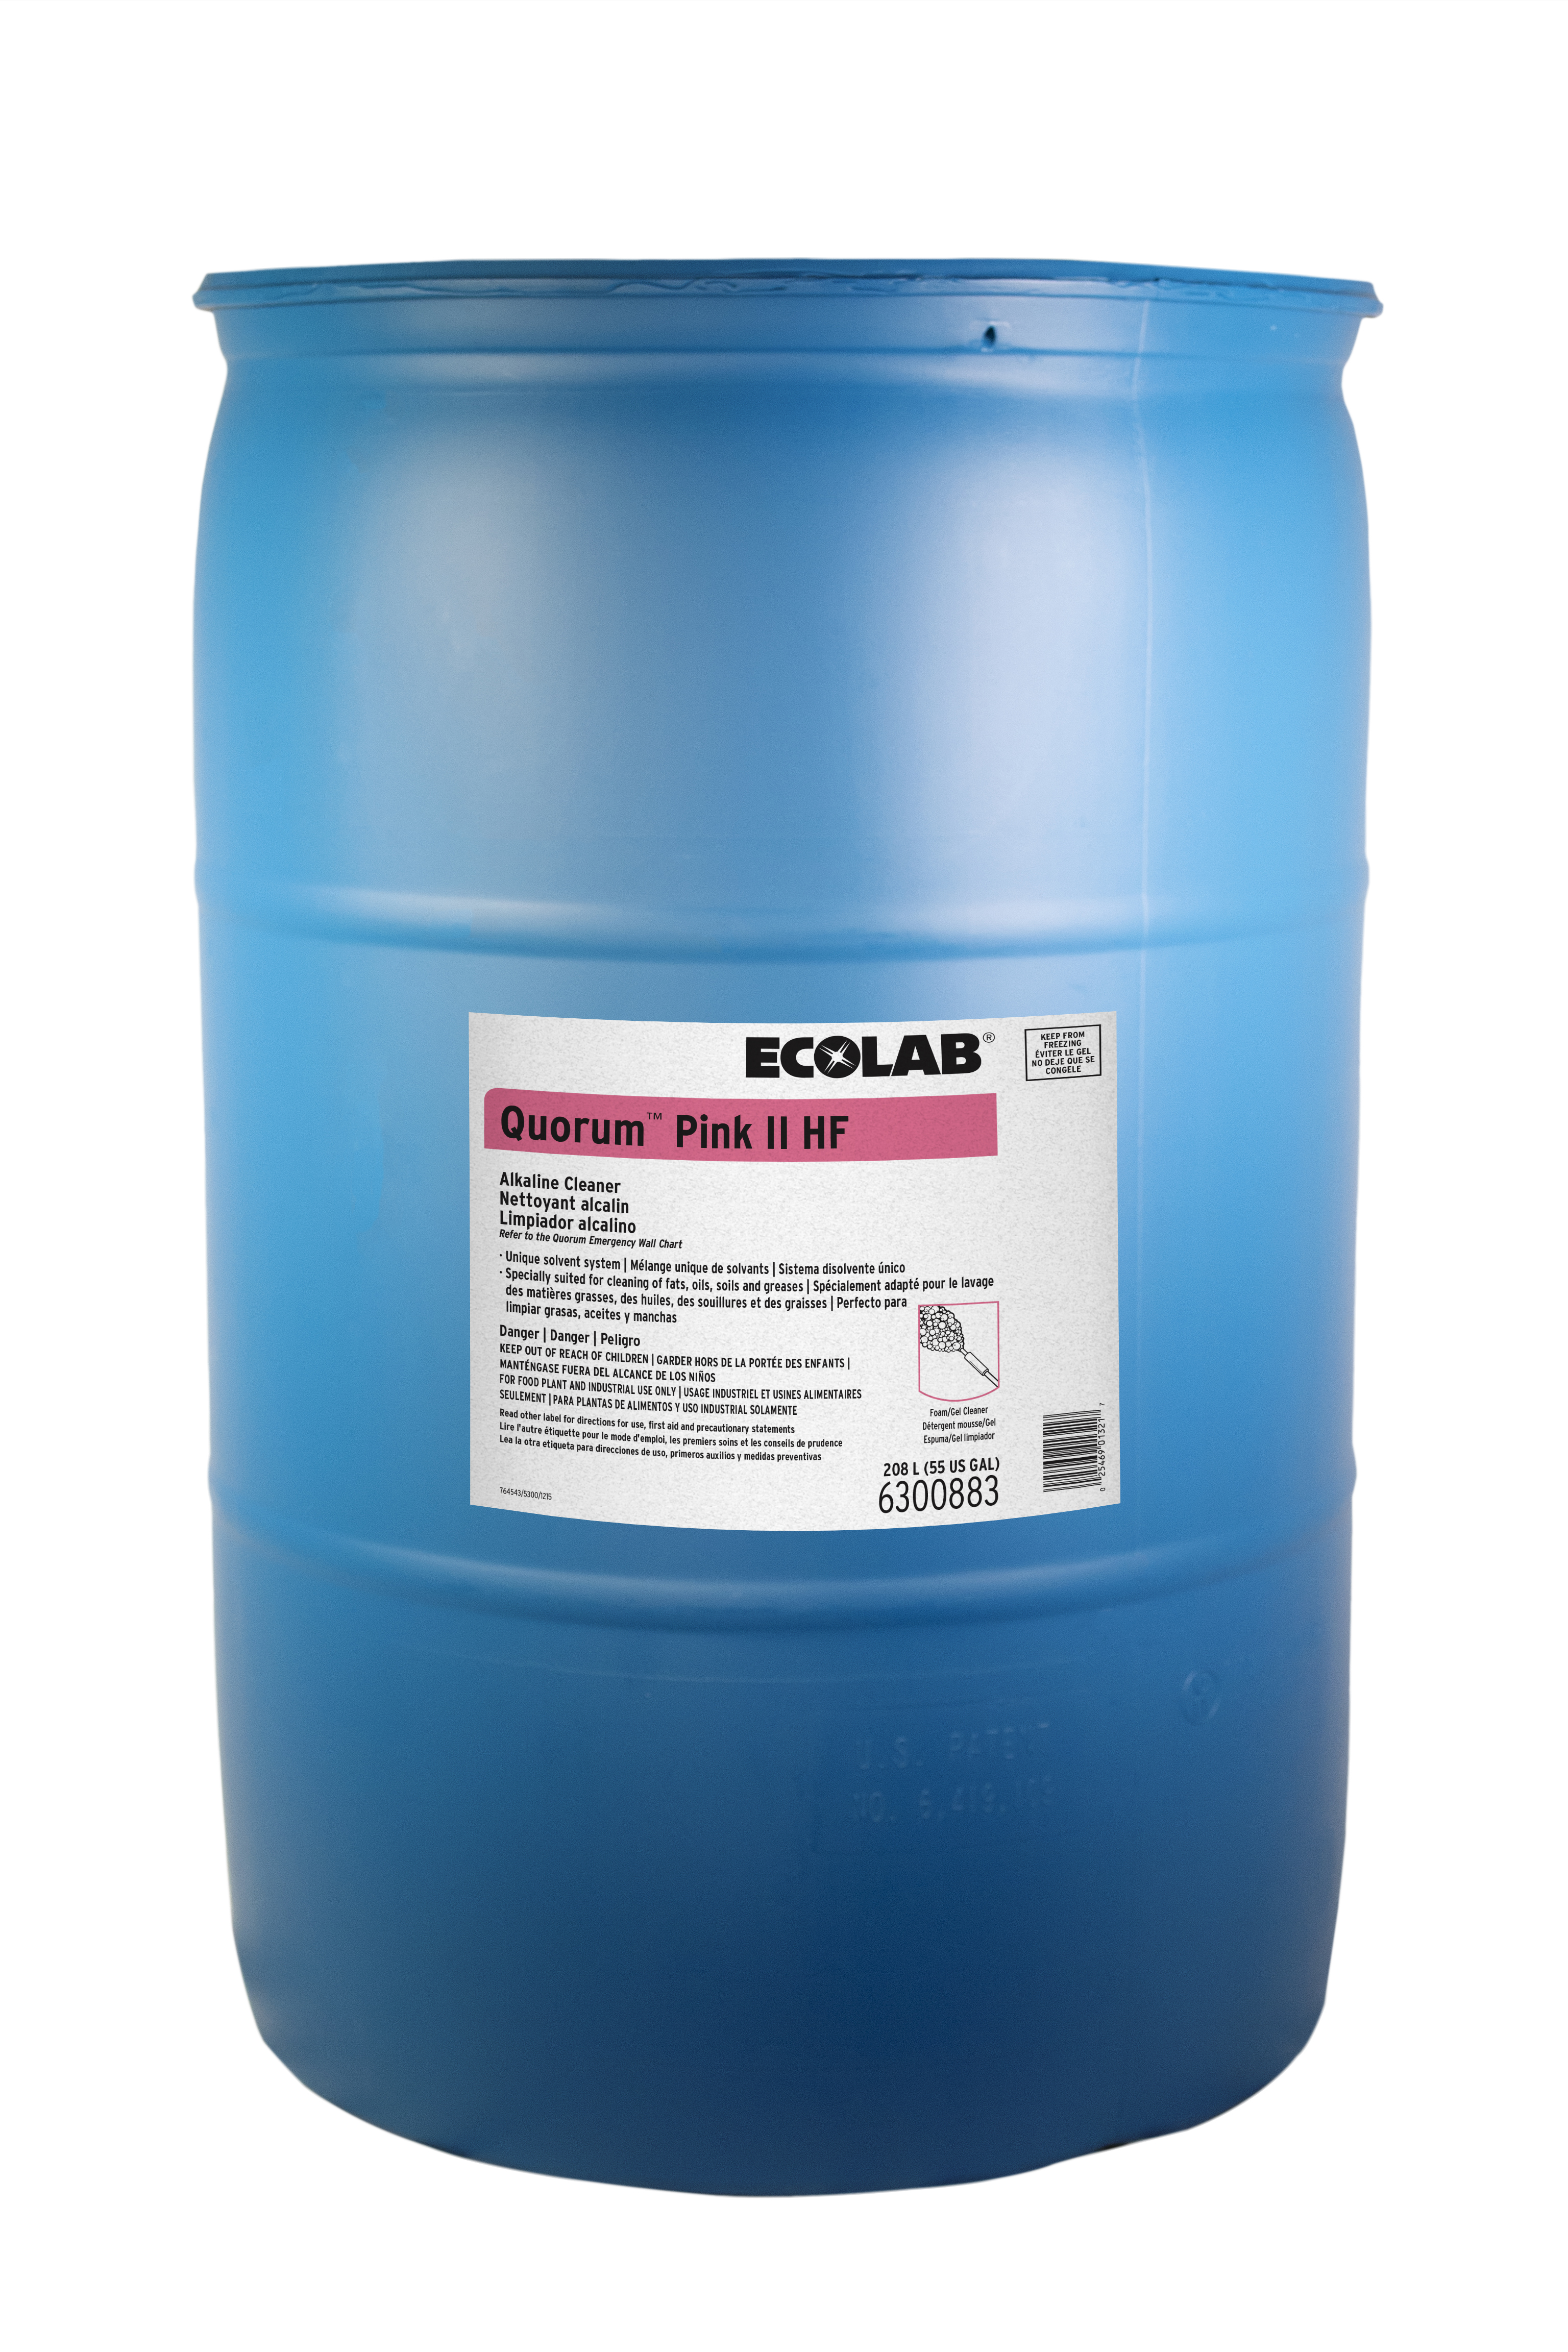 ProChem® DXP PINK Emulsion (Gallon) – All Aspect Screen Supply